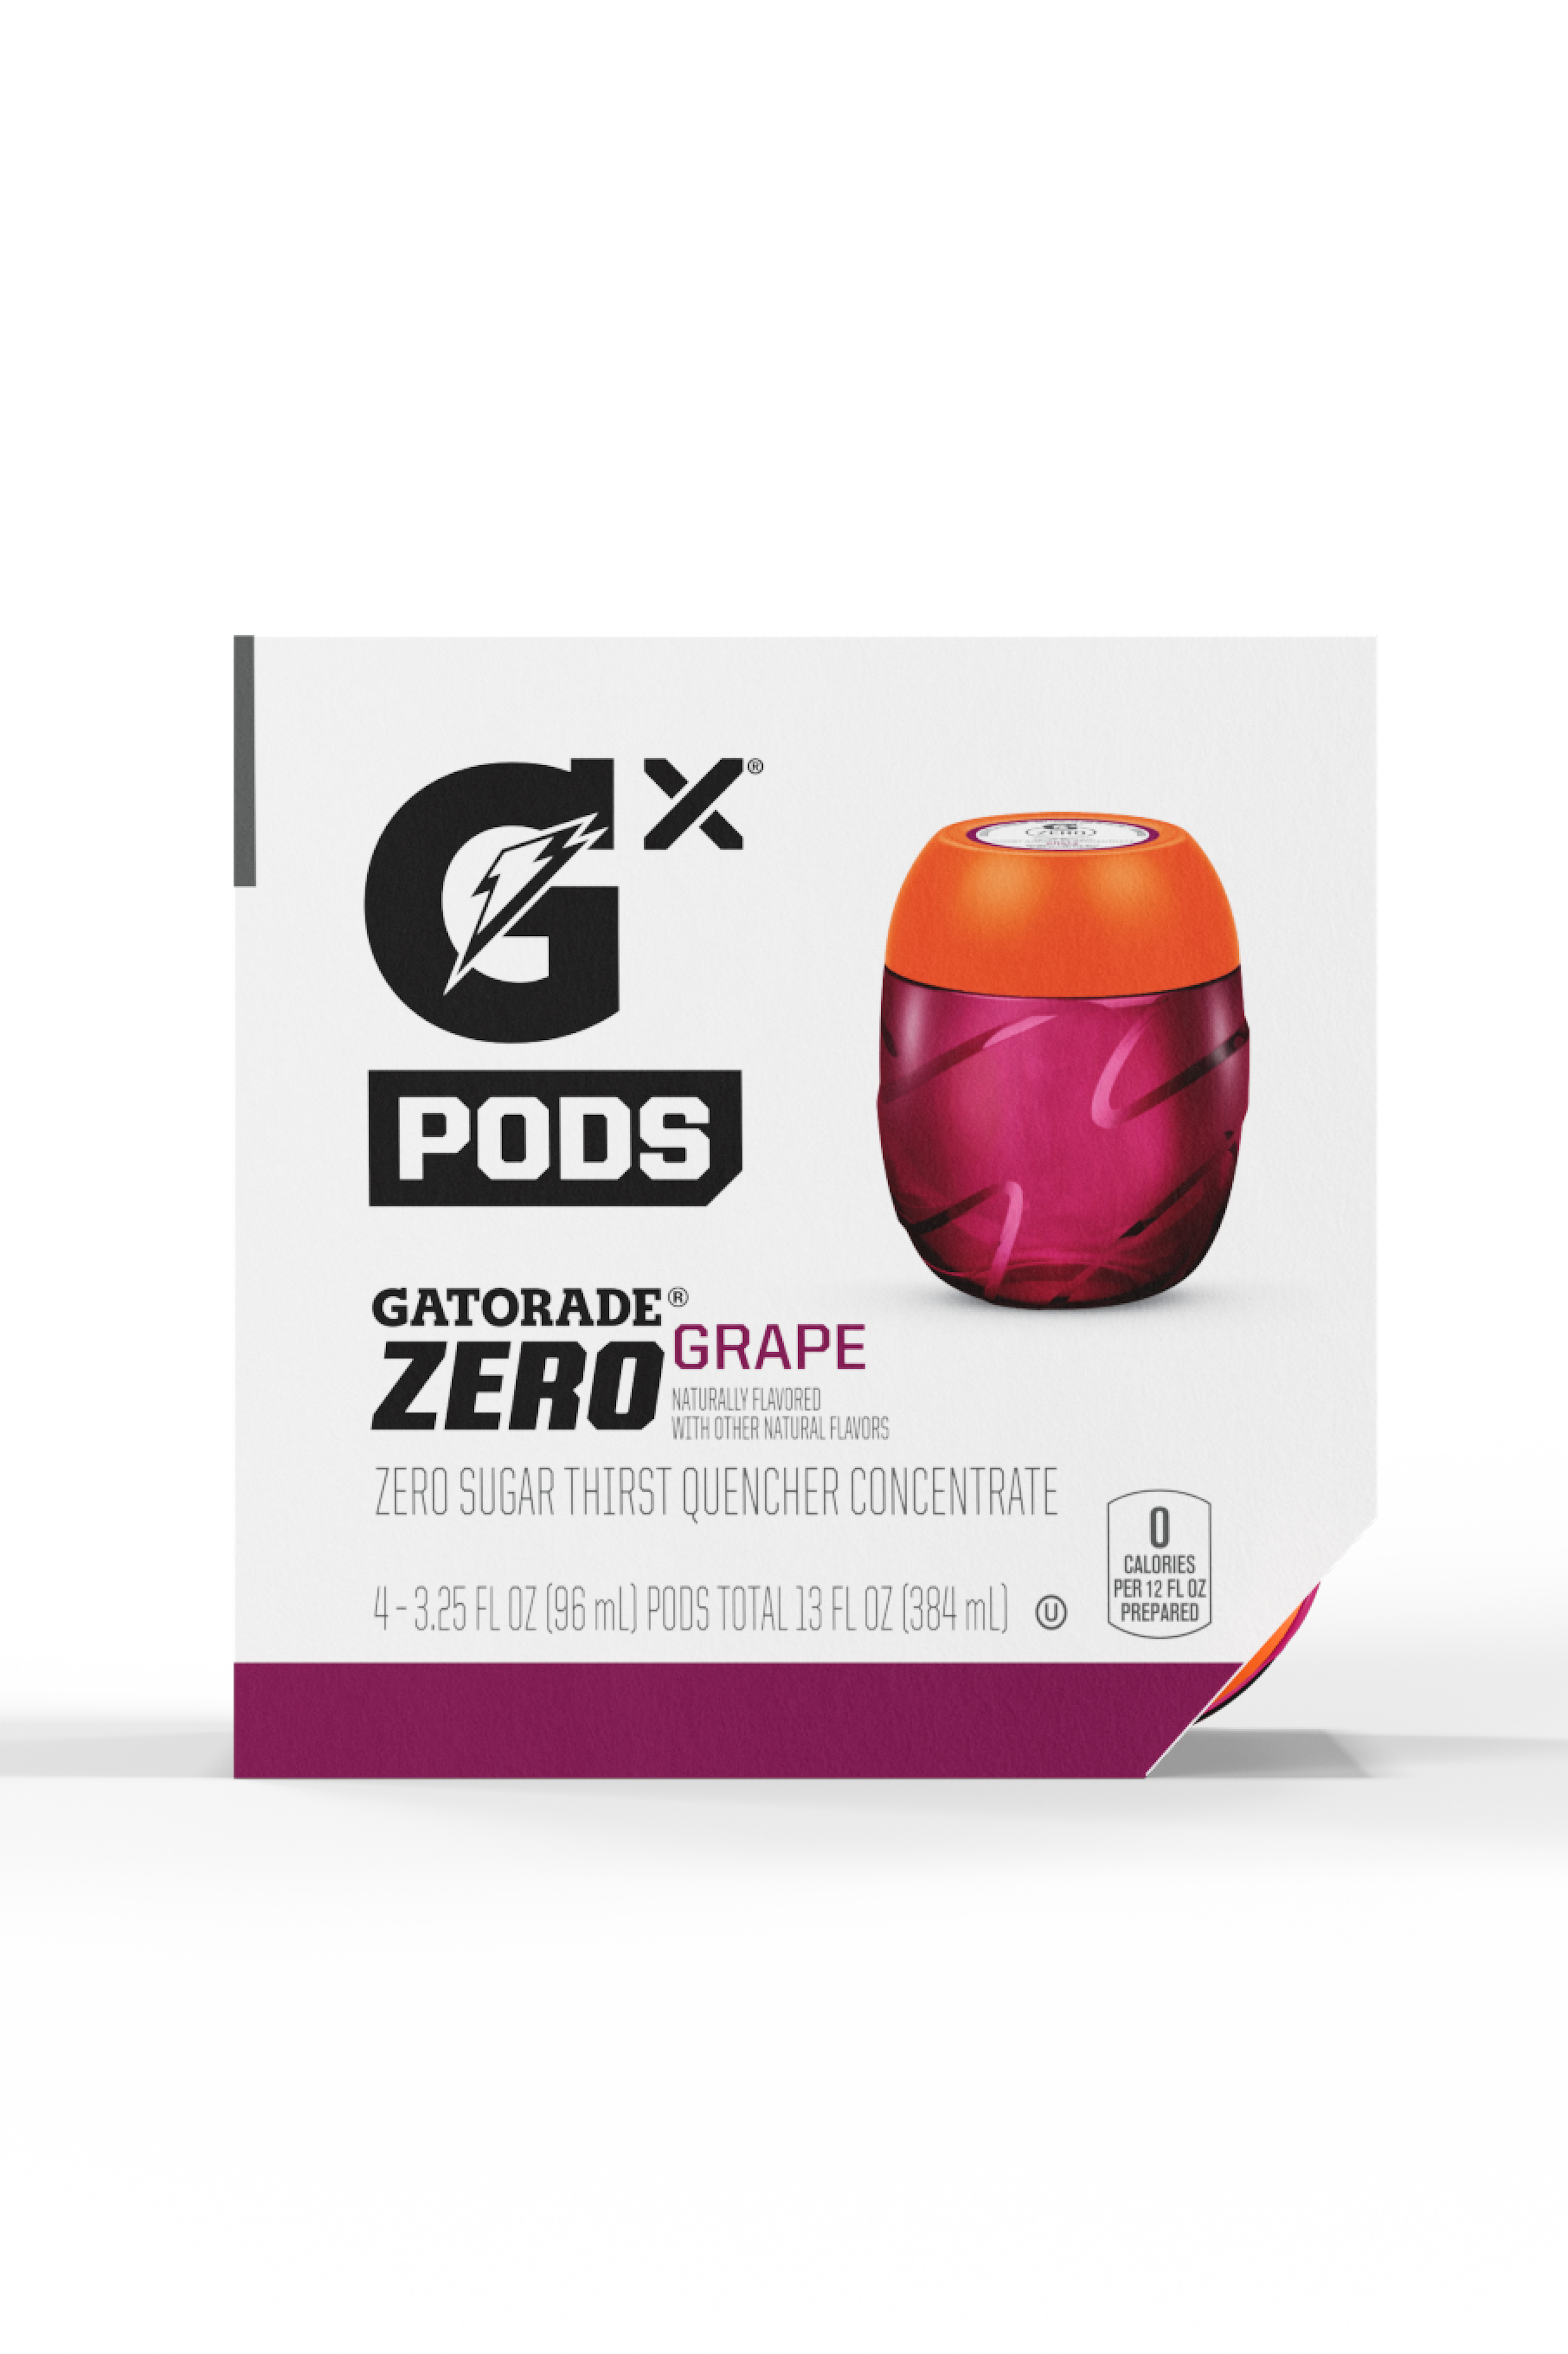 Gatorade Zero Grape Pod Box